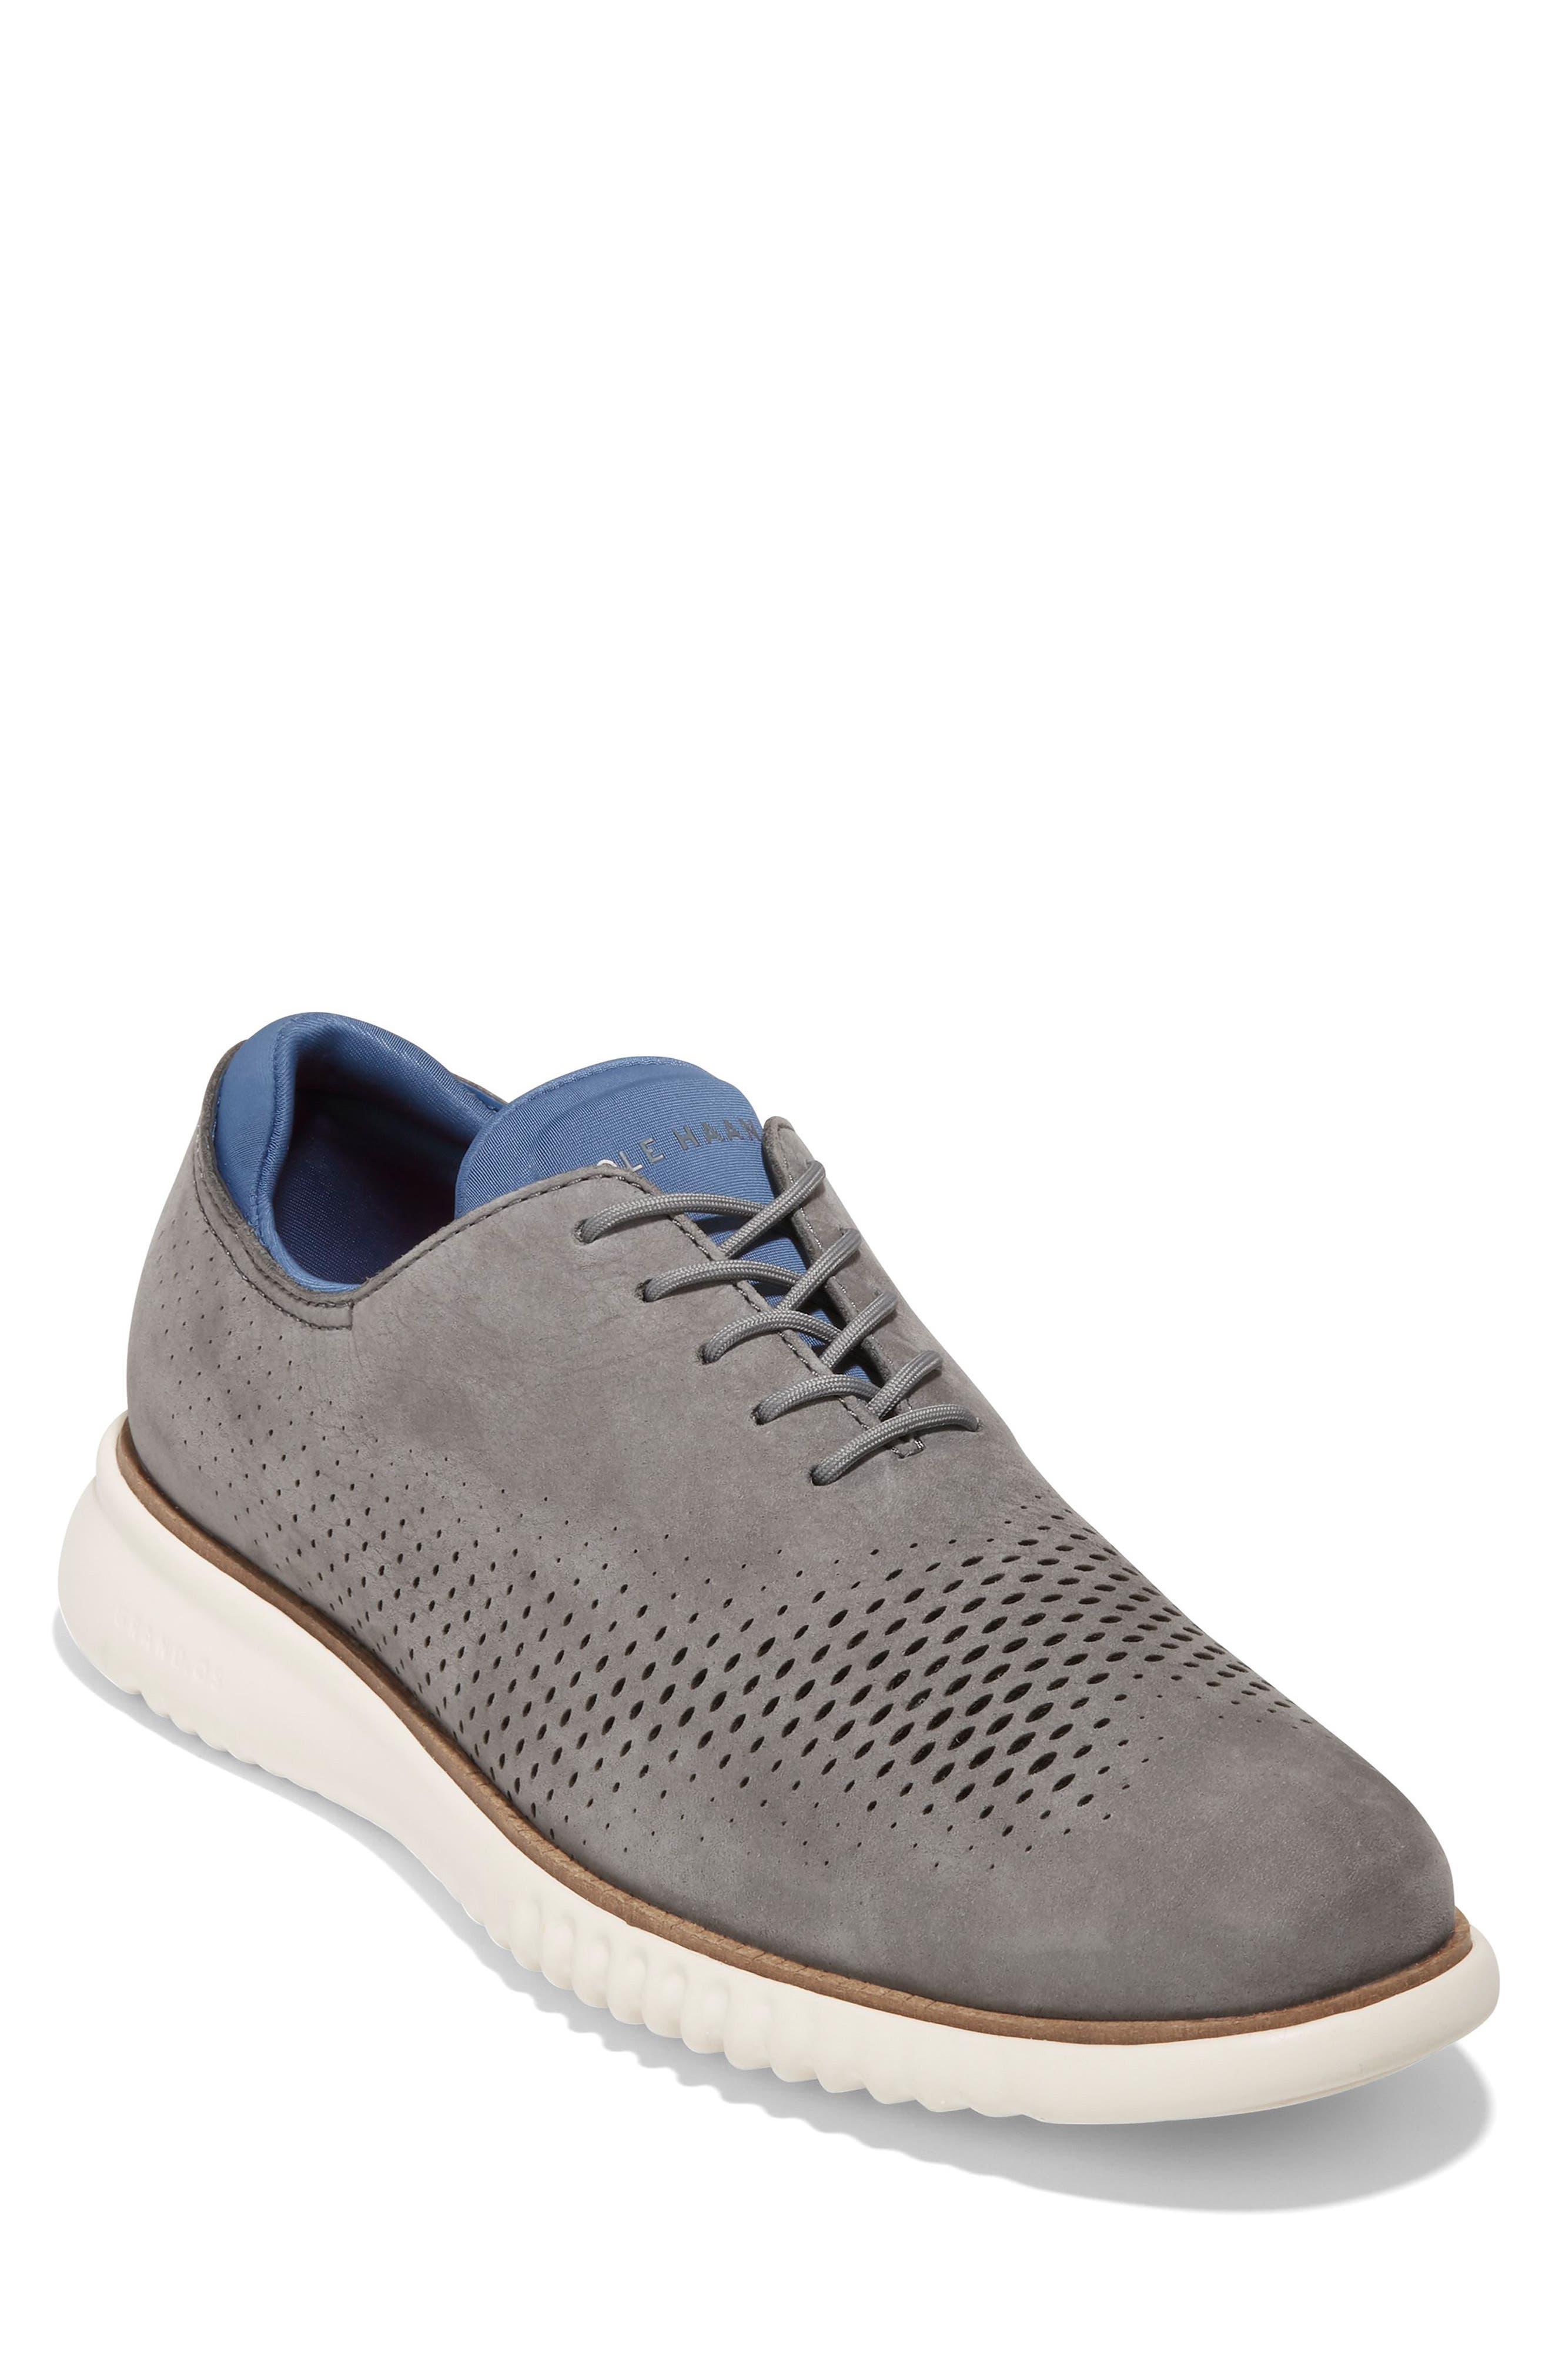 grey dress shoes for men